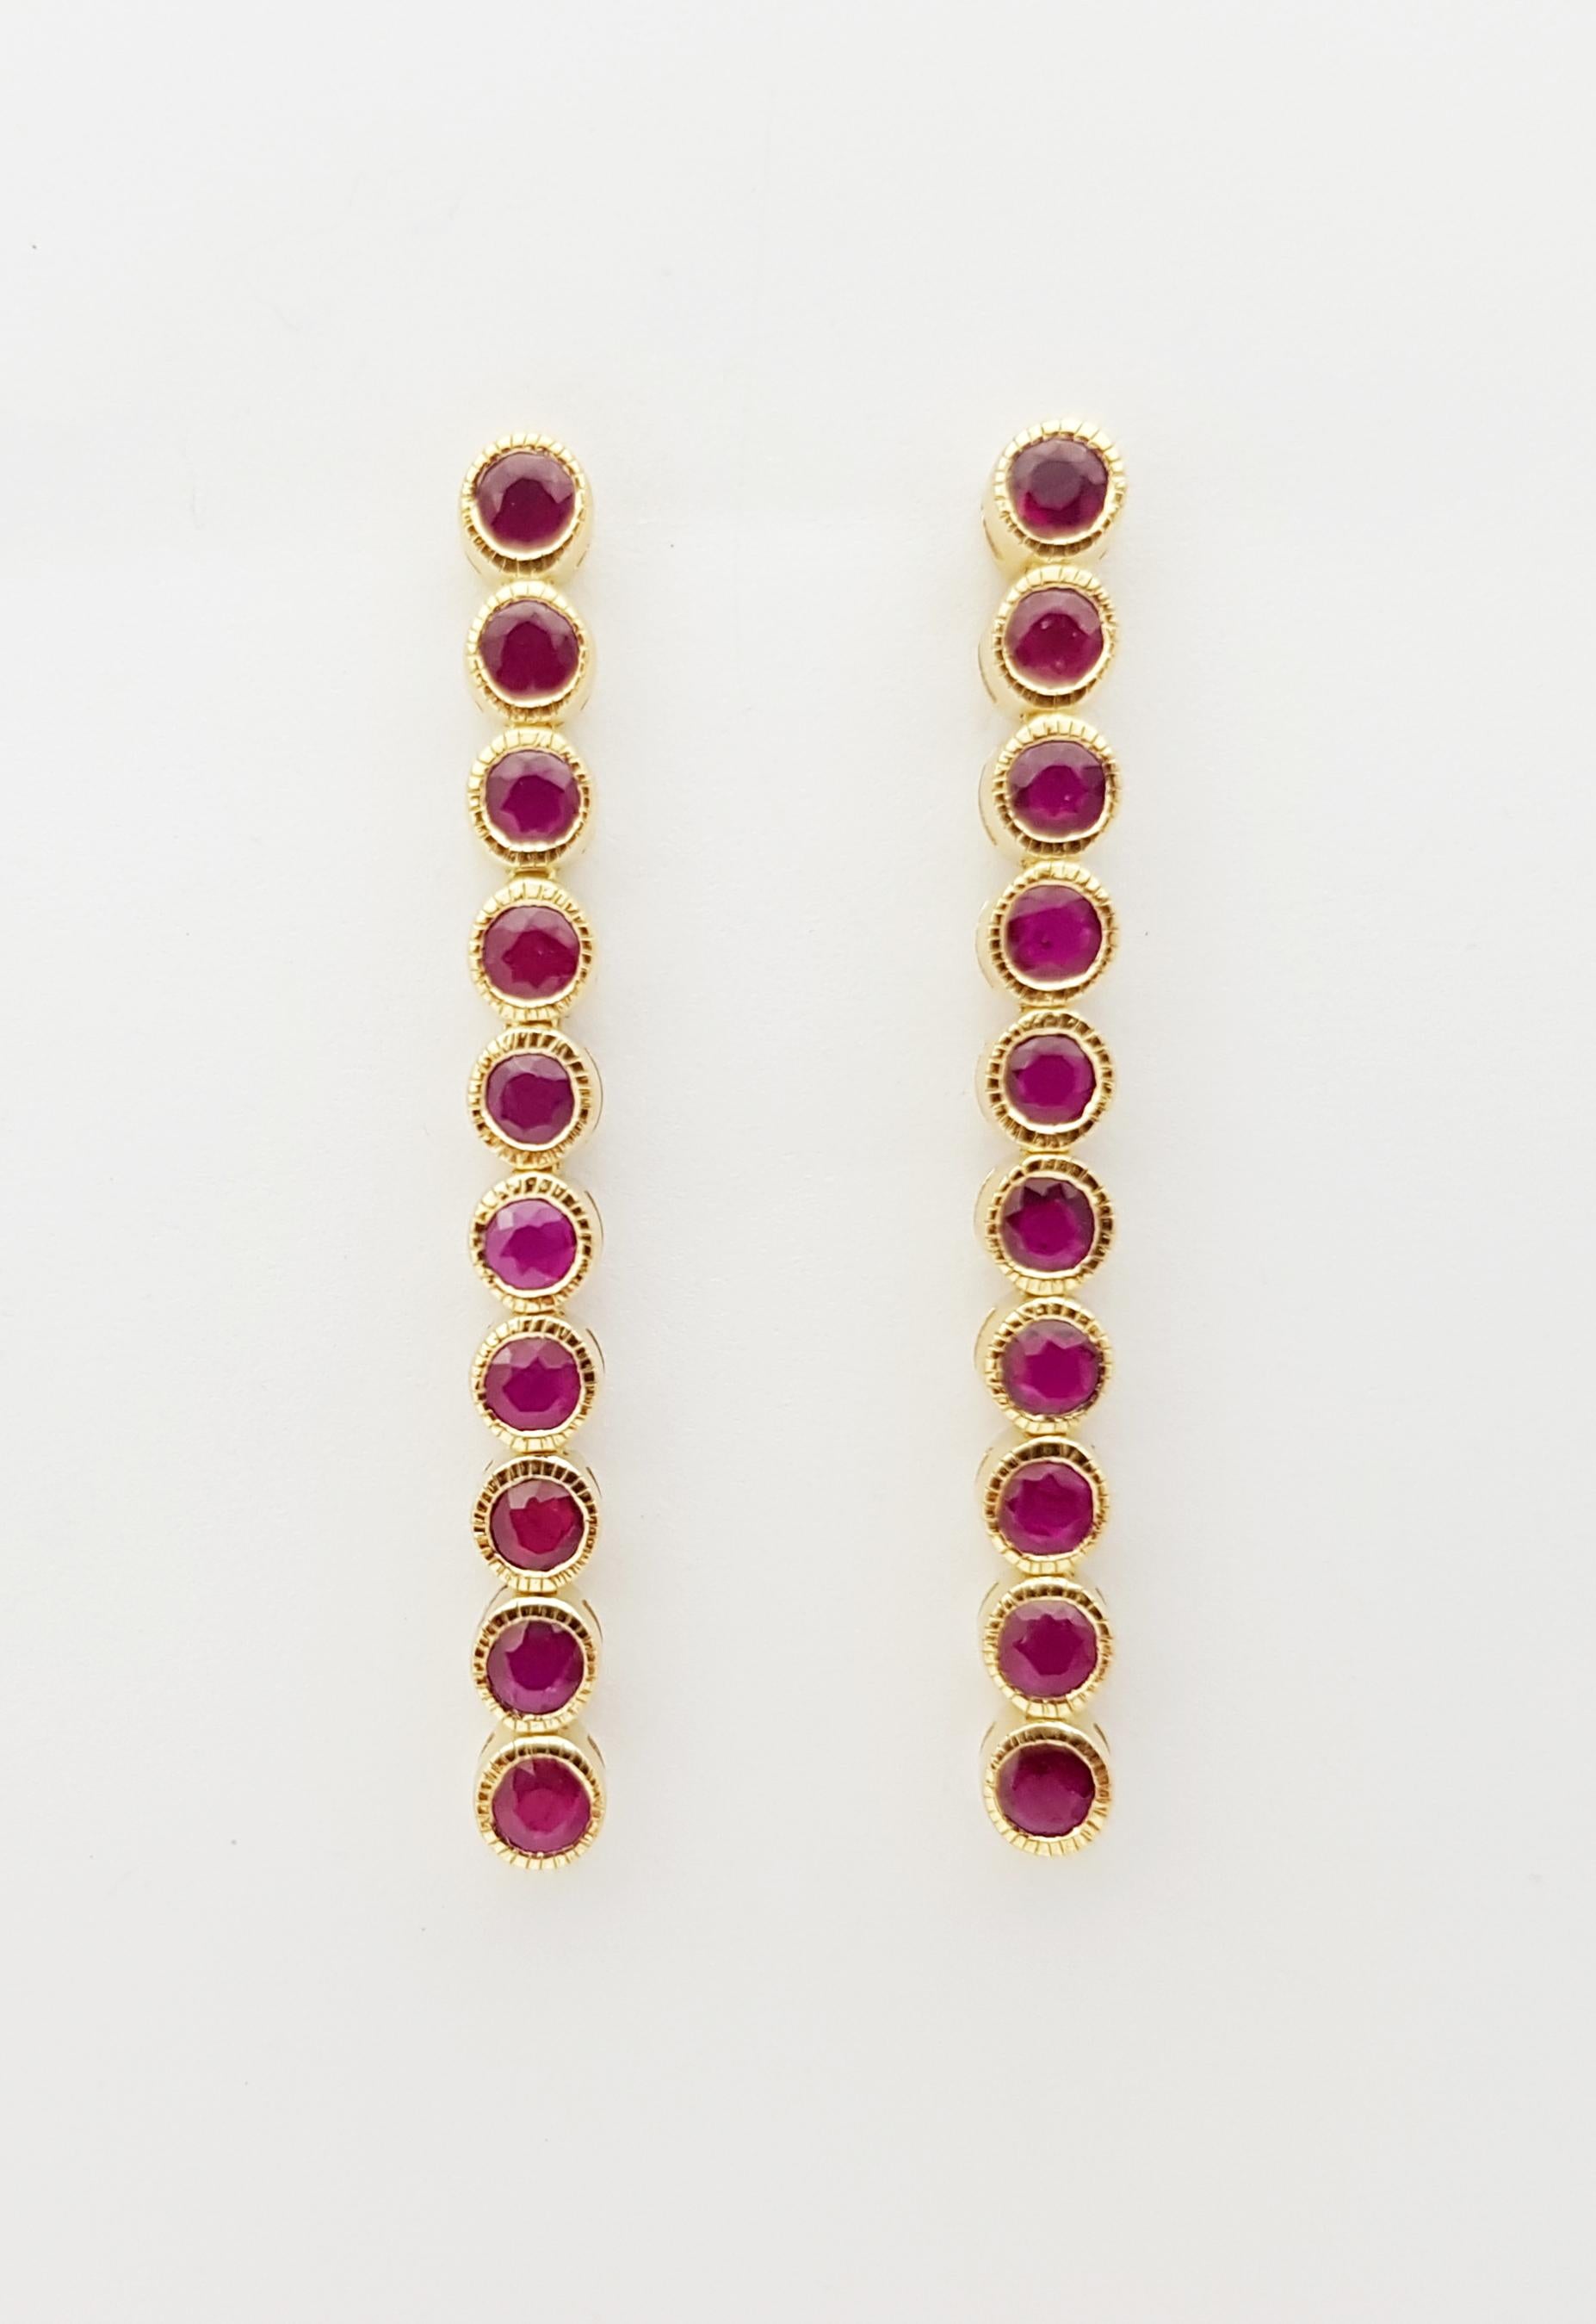 Ruby 1.96  carats Earrings set in 18 Karat Gold Settings

Width:   0.30 cm 
Length:  6.50 cm
Total Weight: 5.99 grams

